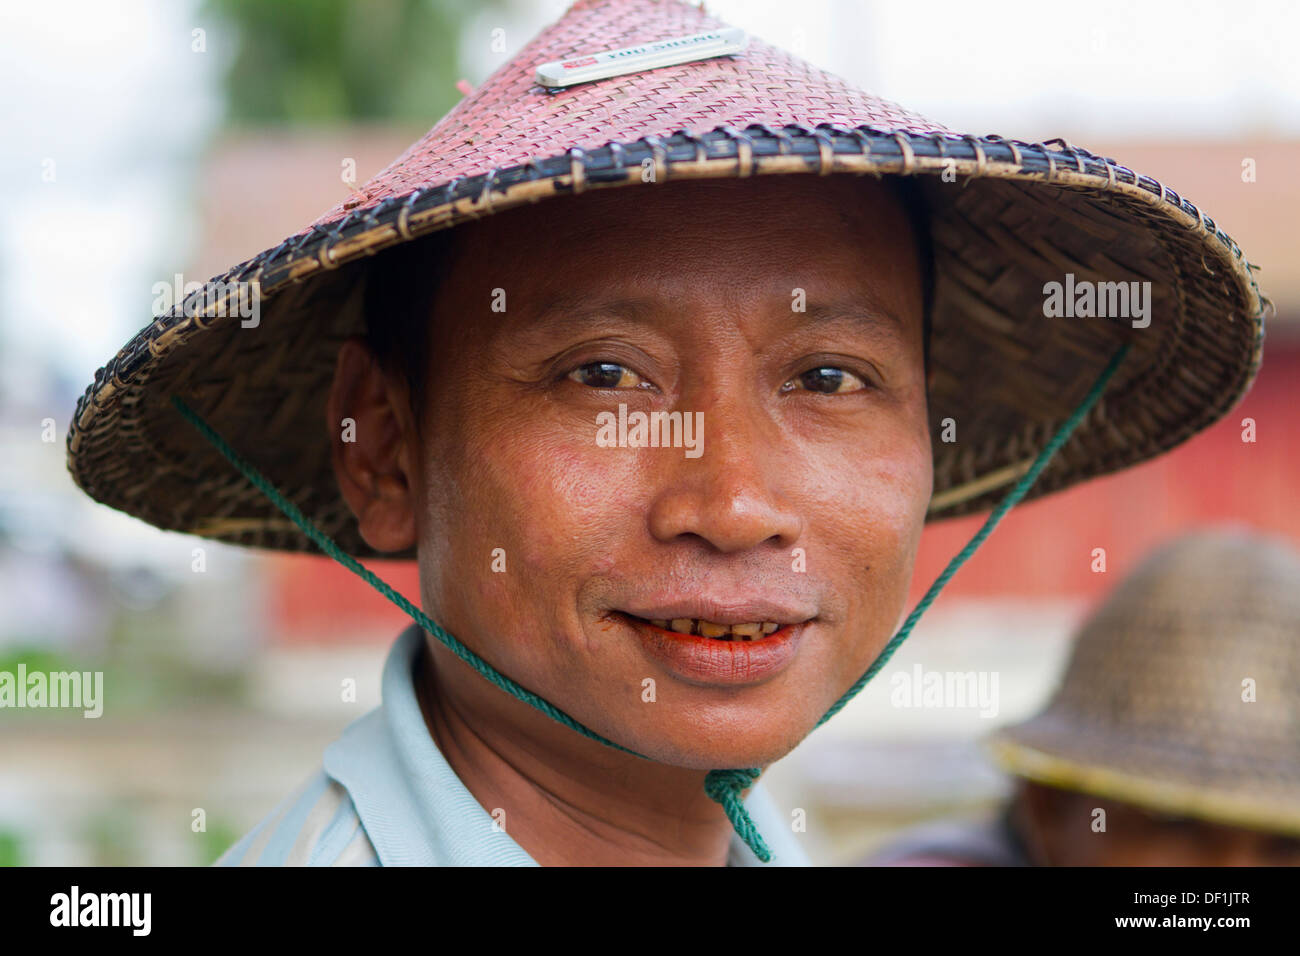 A burmese man in Yangon, Burma. Stock Photo